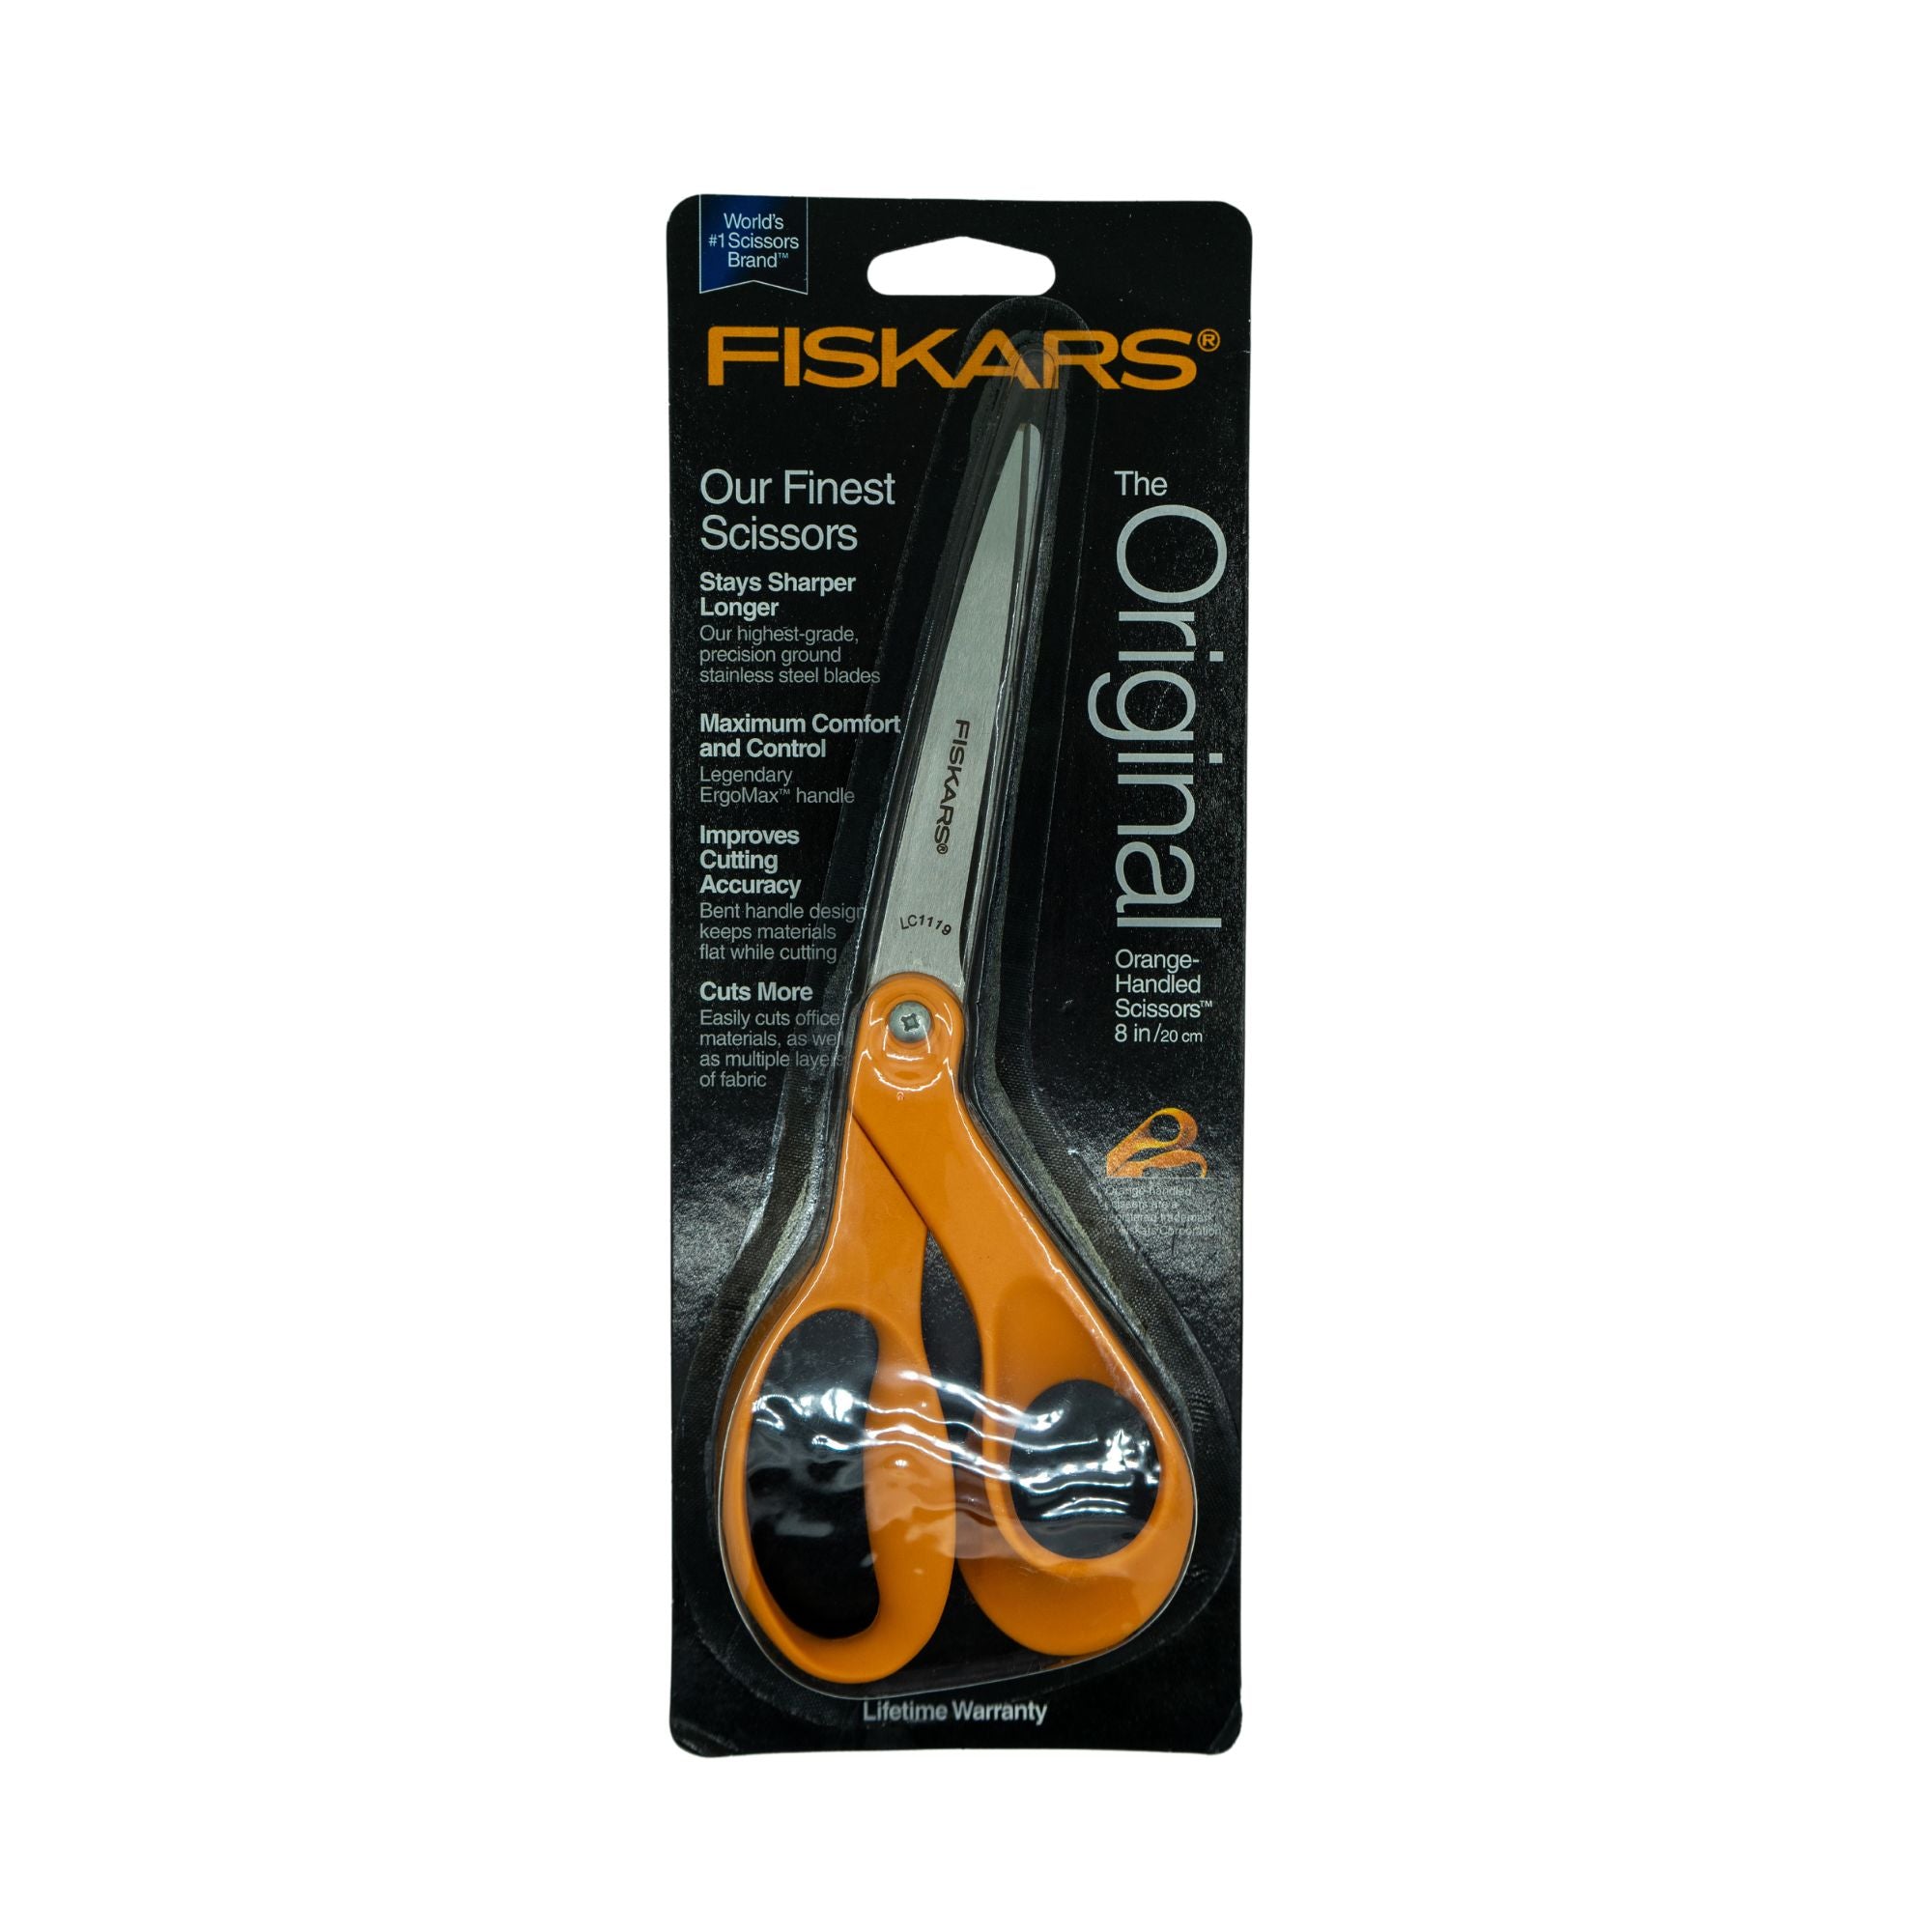 Fiskars Scissors Review * Great Scissors* 